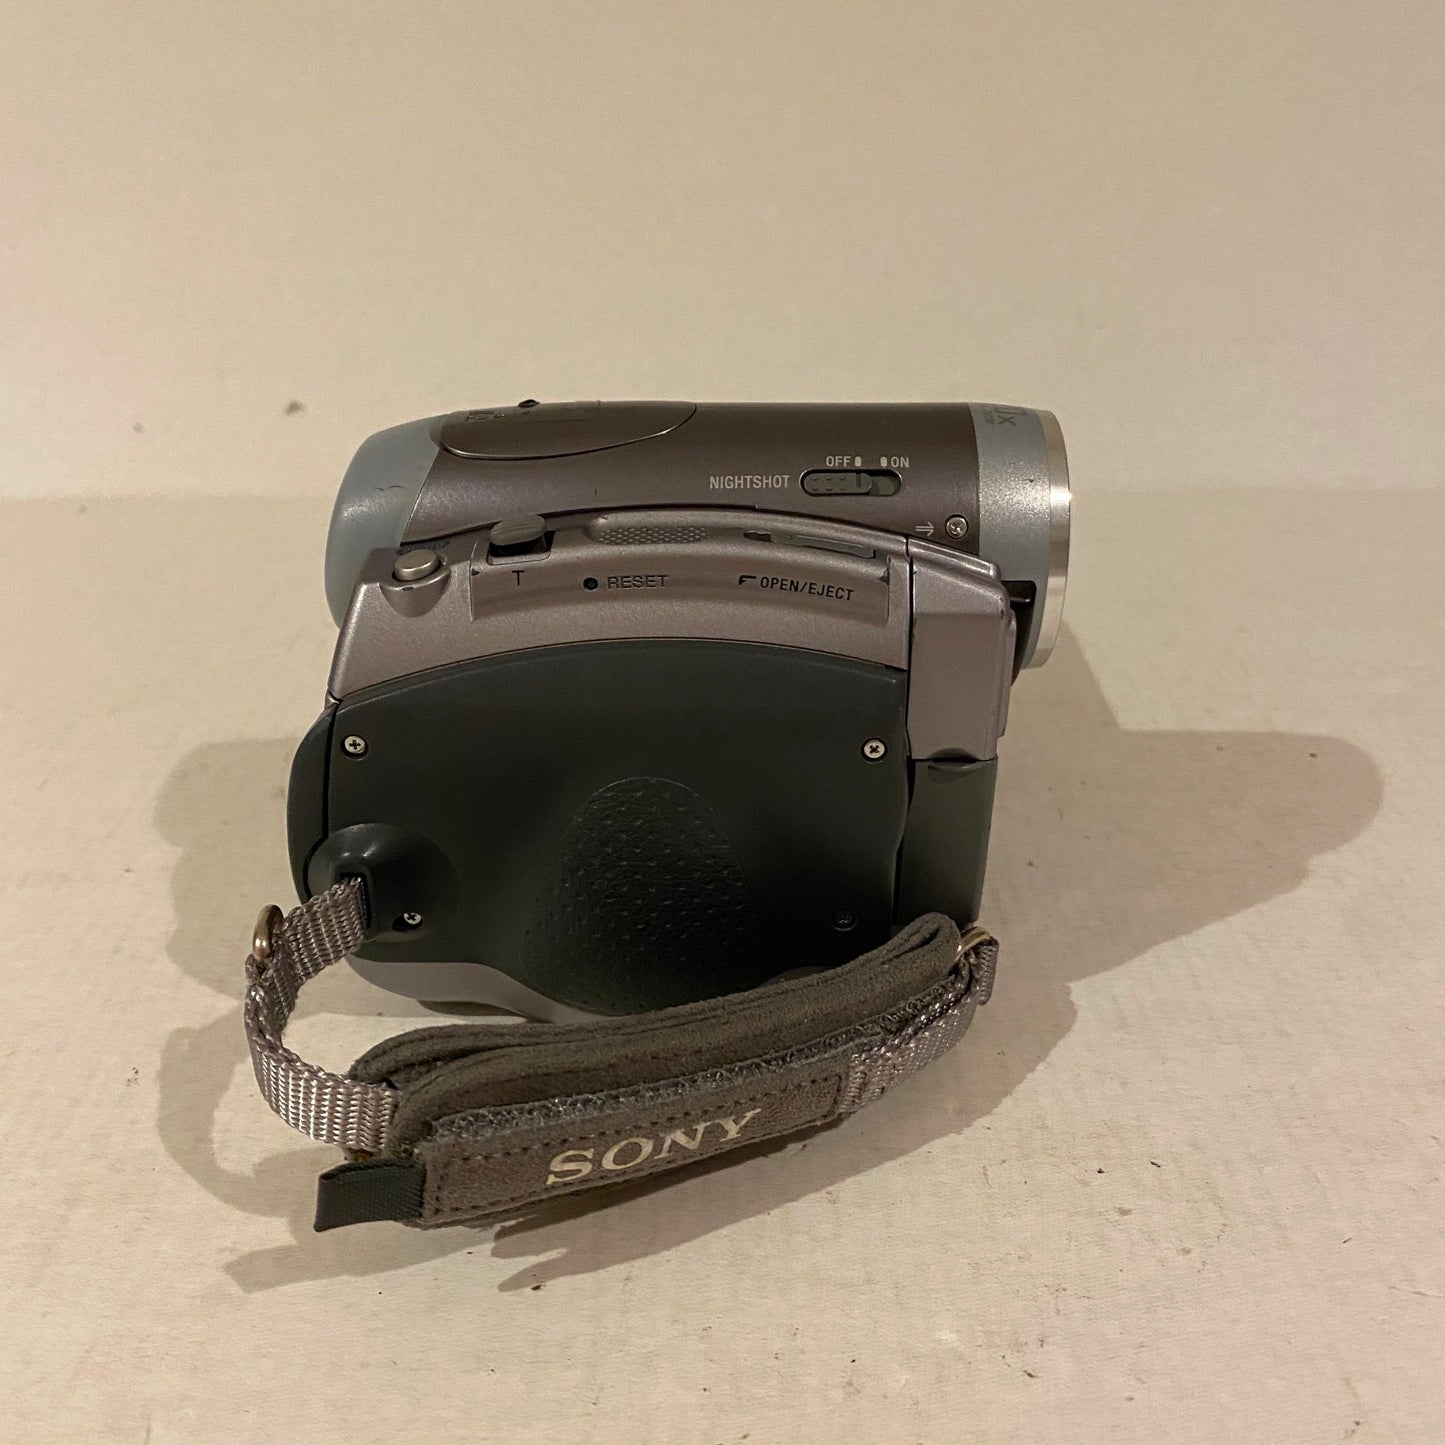 Sony Handycam NTSC MiniDV Camcorder - DCR-HC90